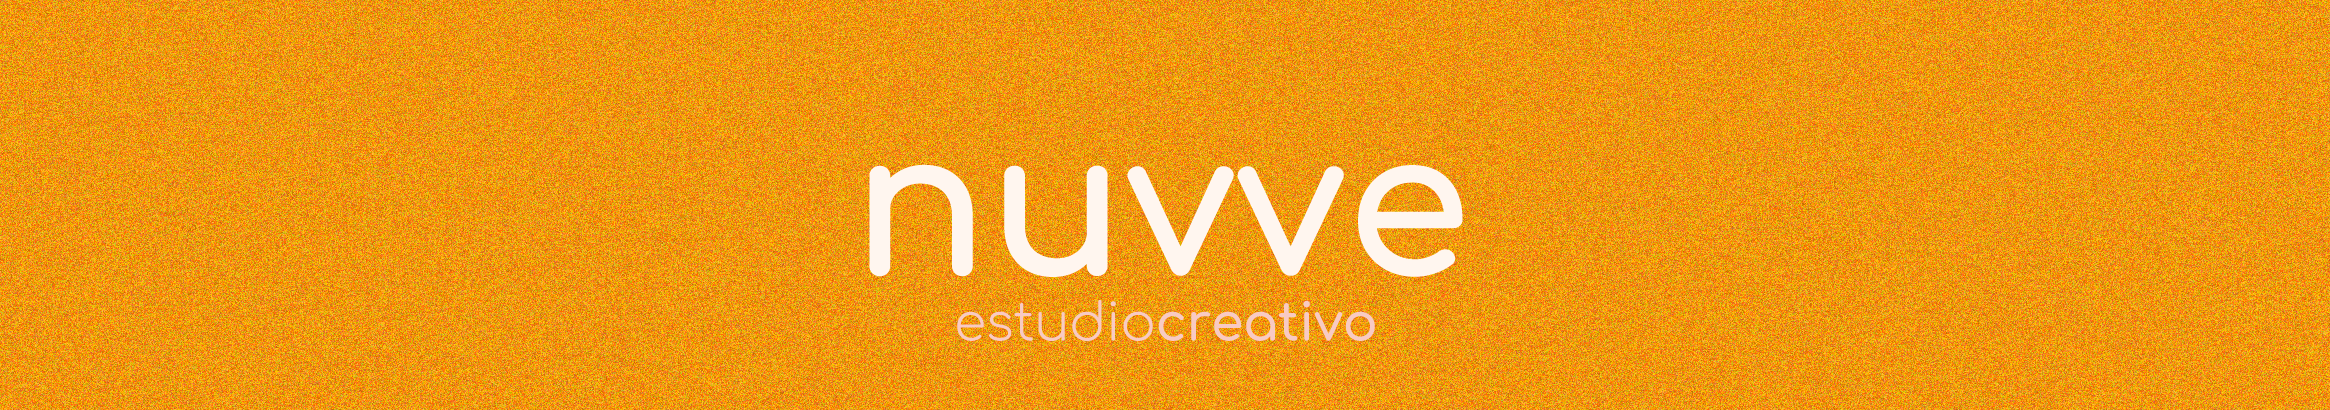 Nuvve Estudio Creativo's profile banner